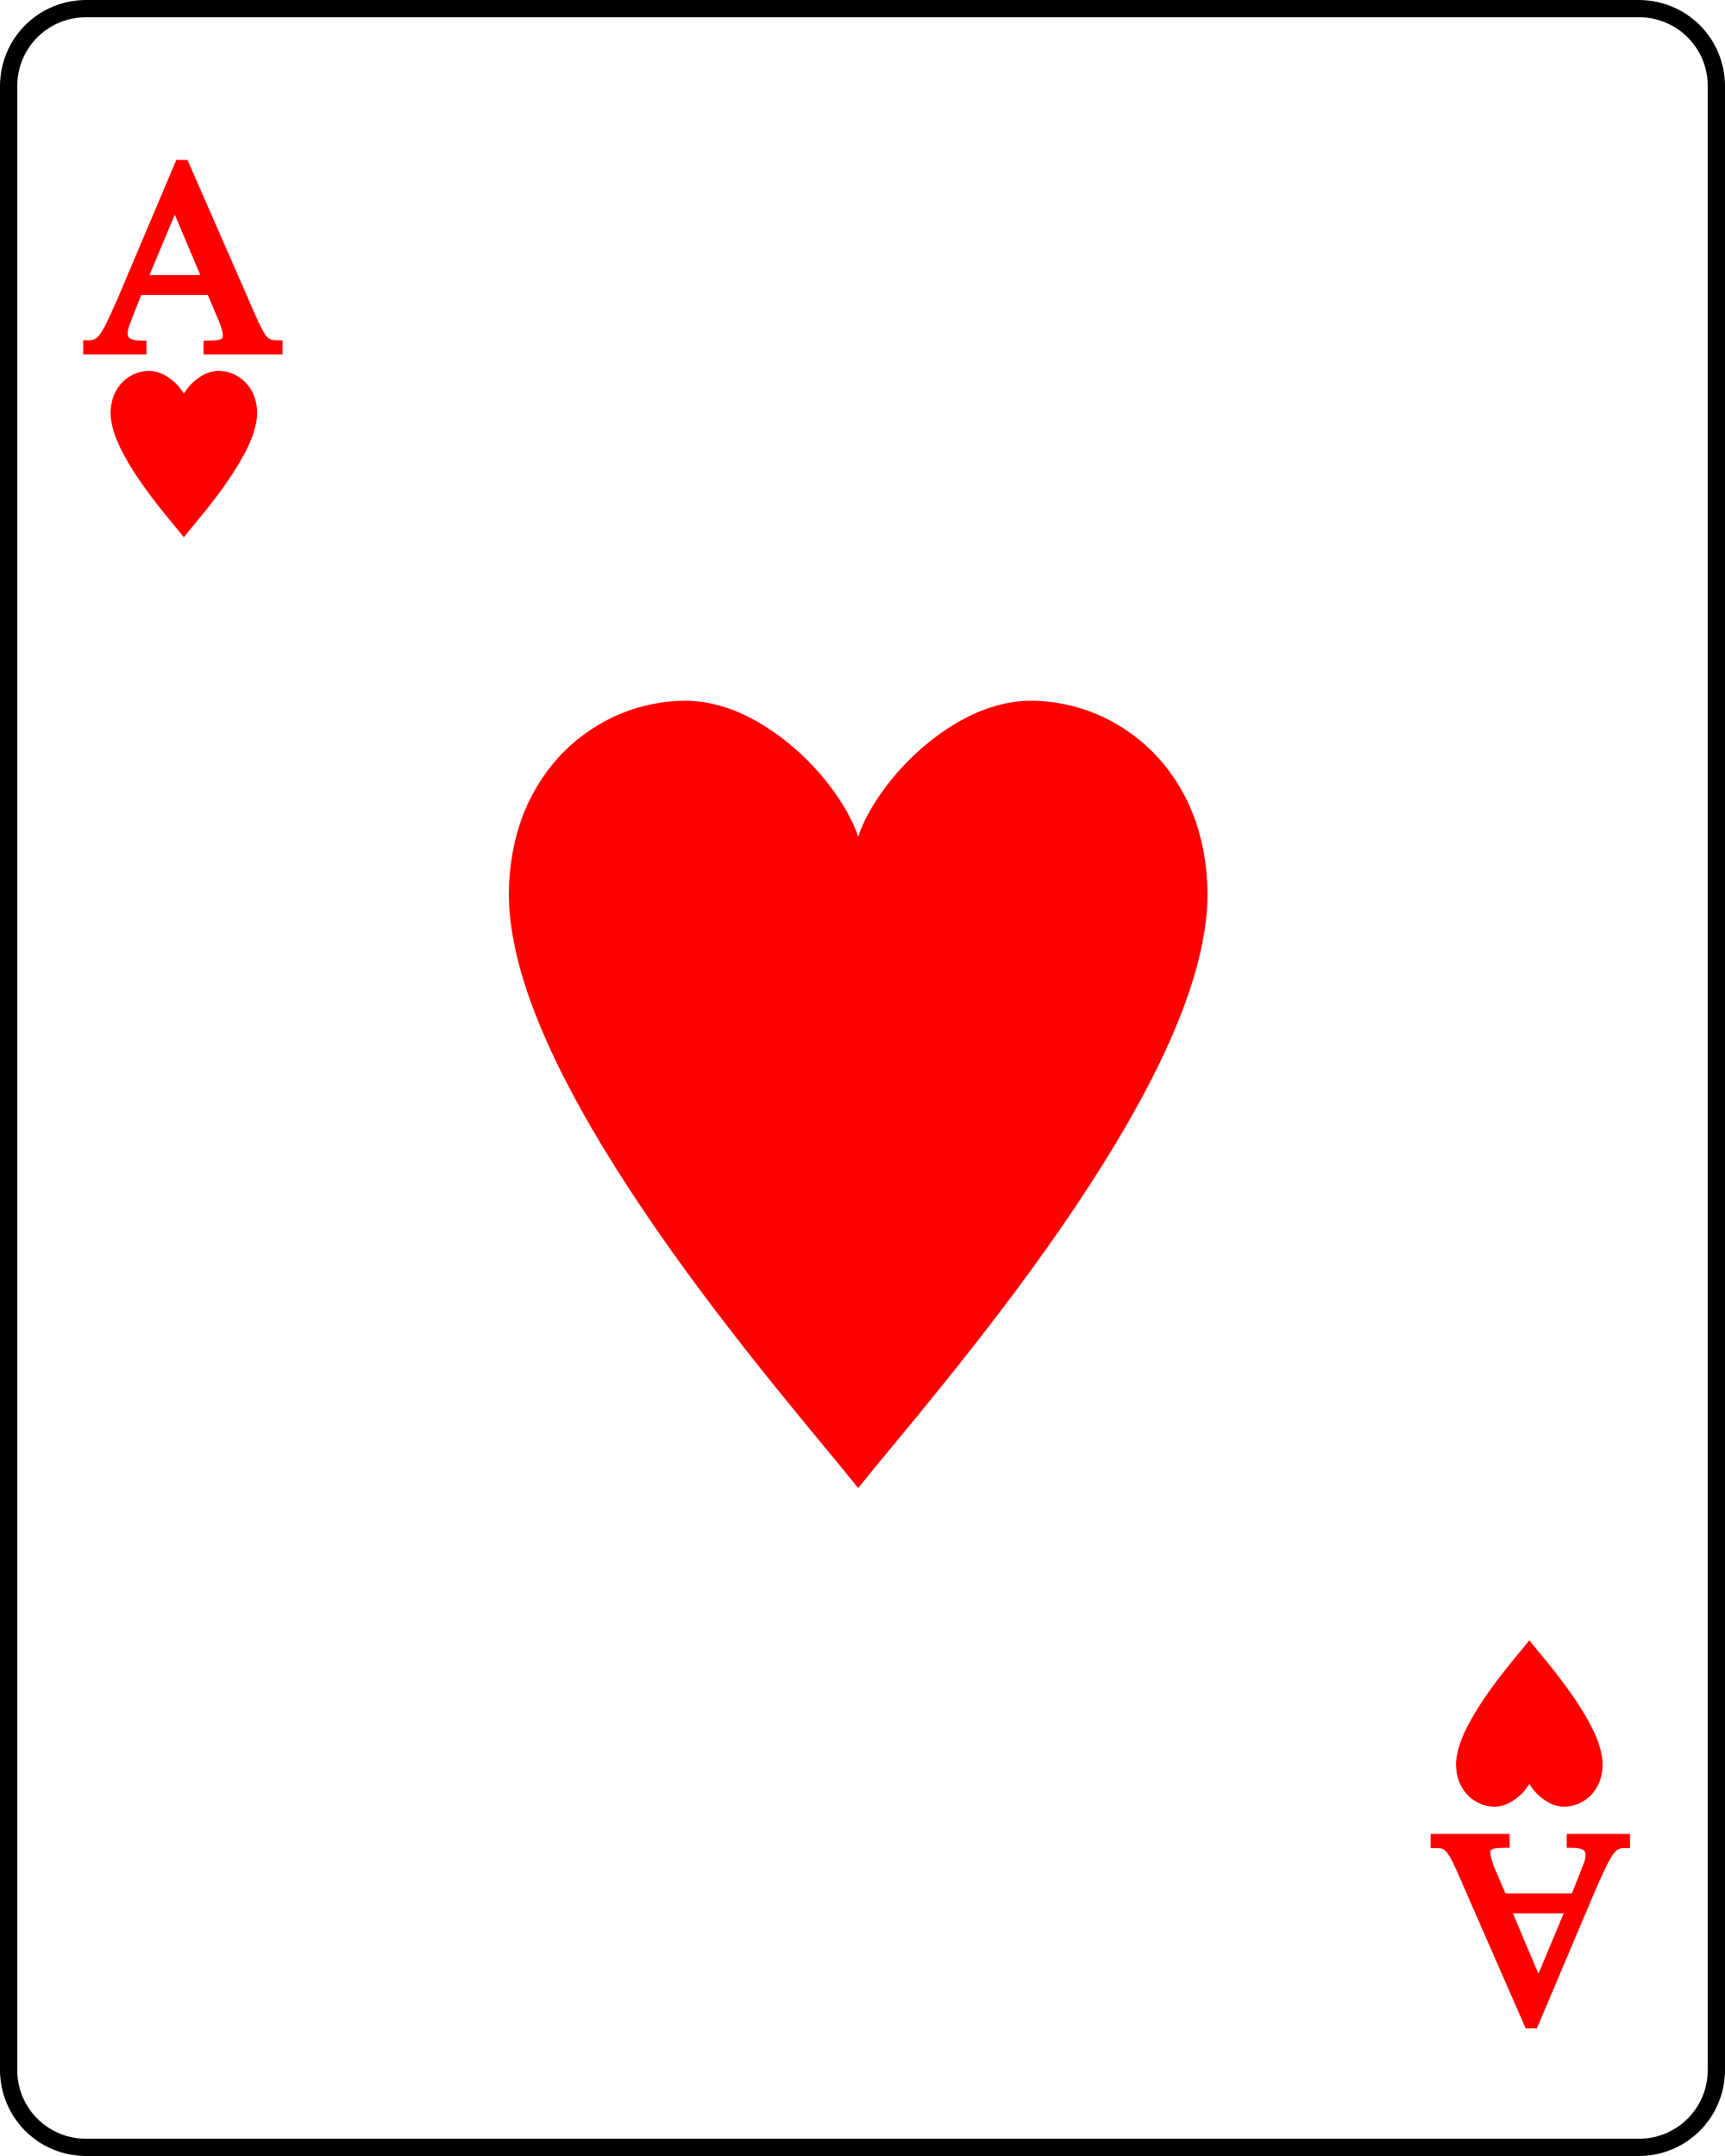 Ace of hearts (card) - Wikipedia, the free encyclopedia